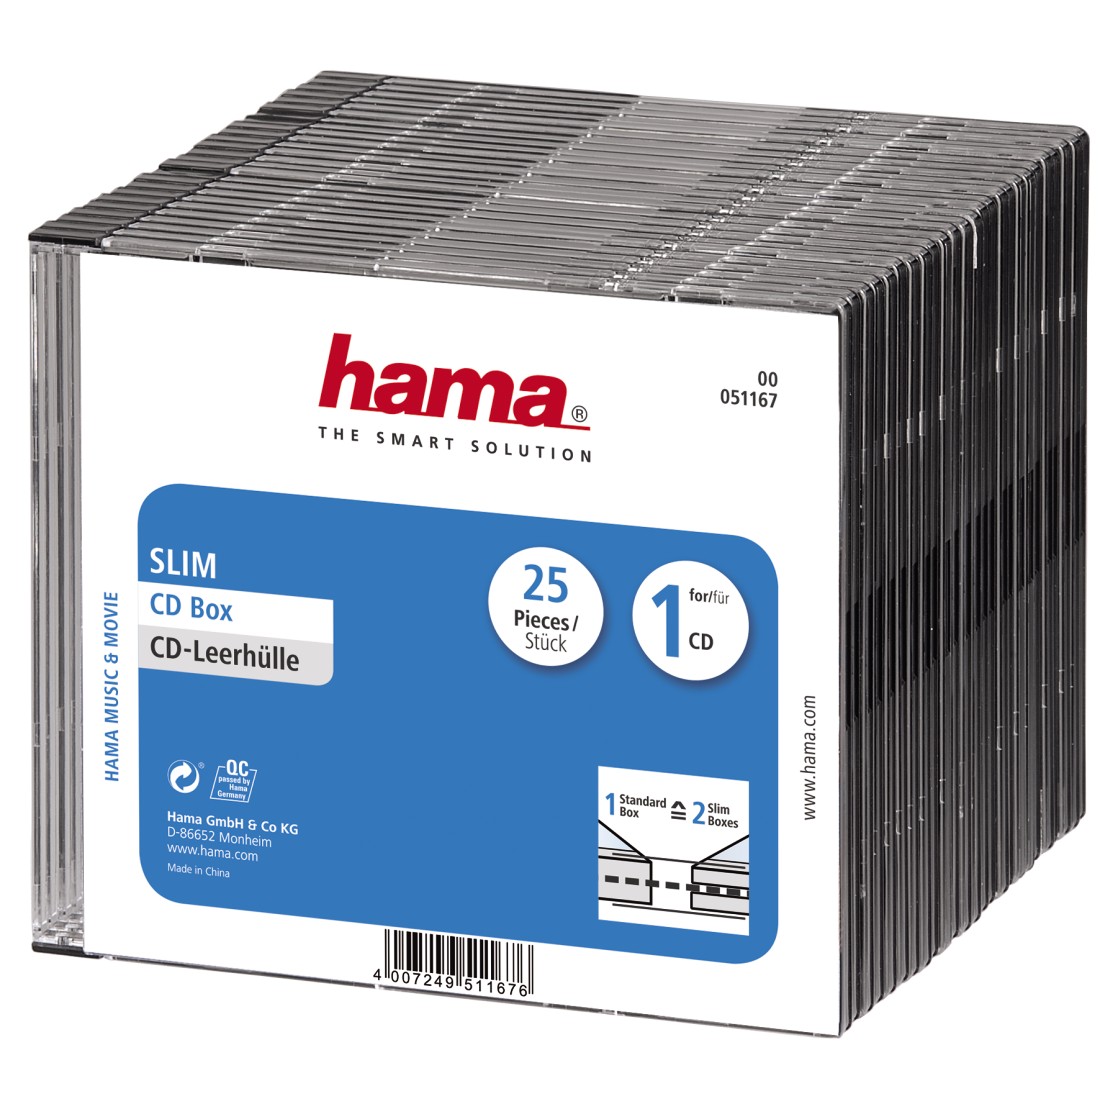 Hama Slim CD Jewel Case, Pack of 25